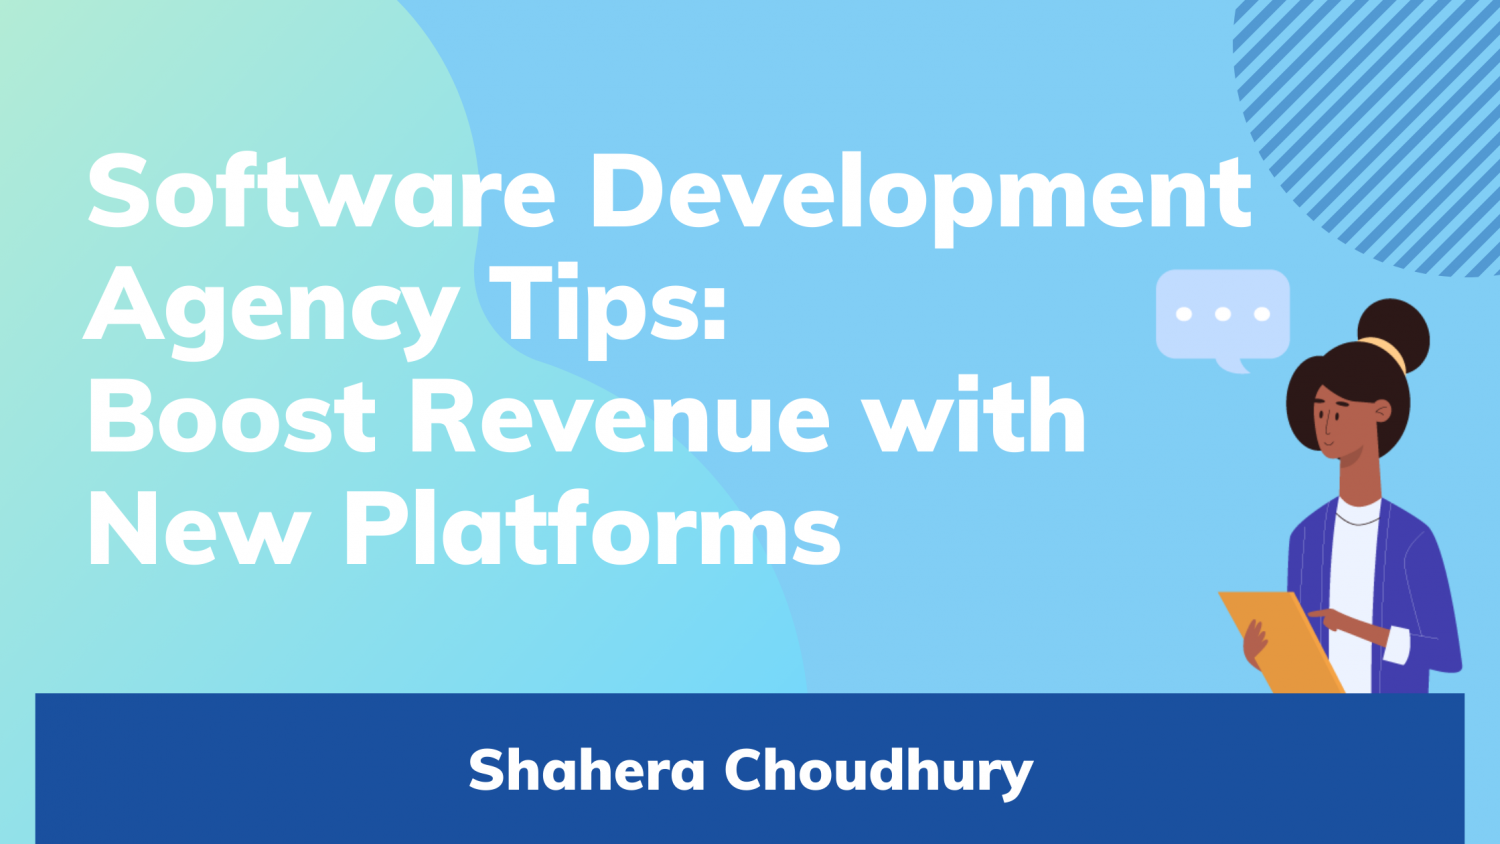 Software Development Agency - Explore New Platforms for Boosting Revenue